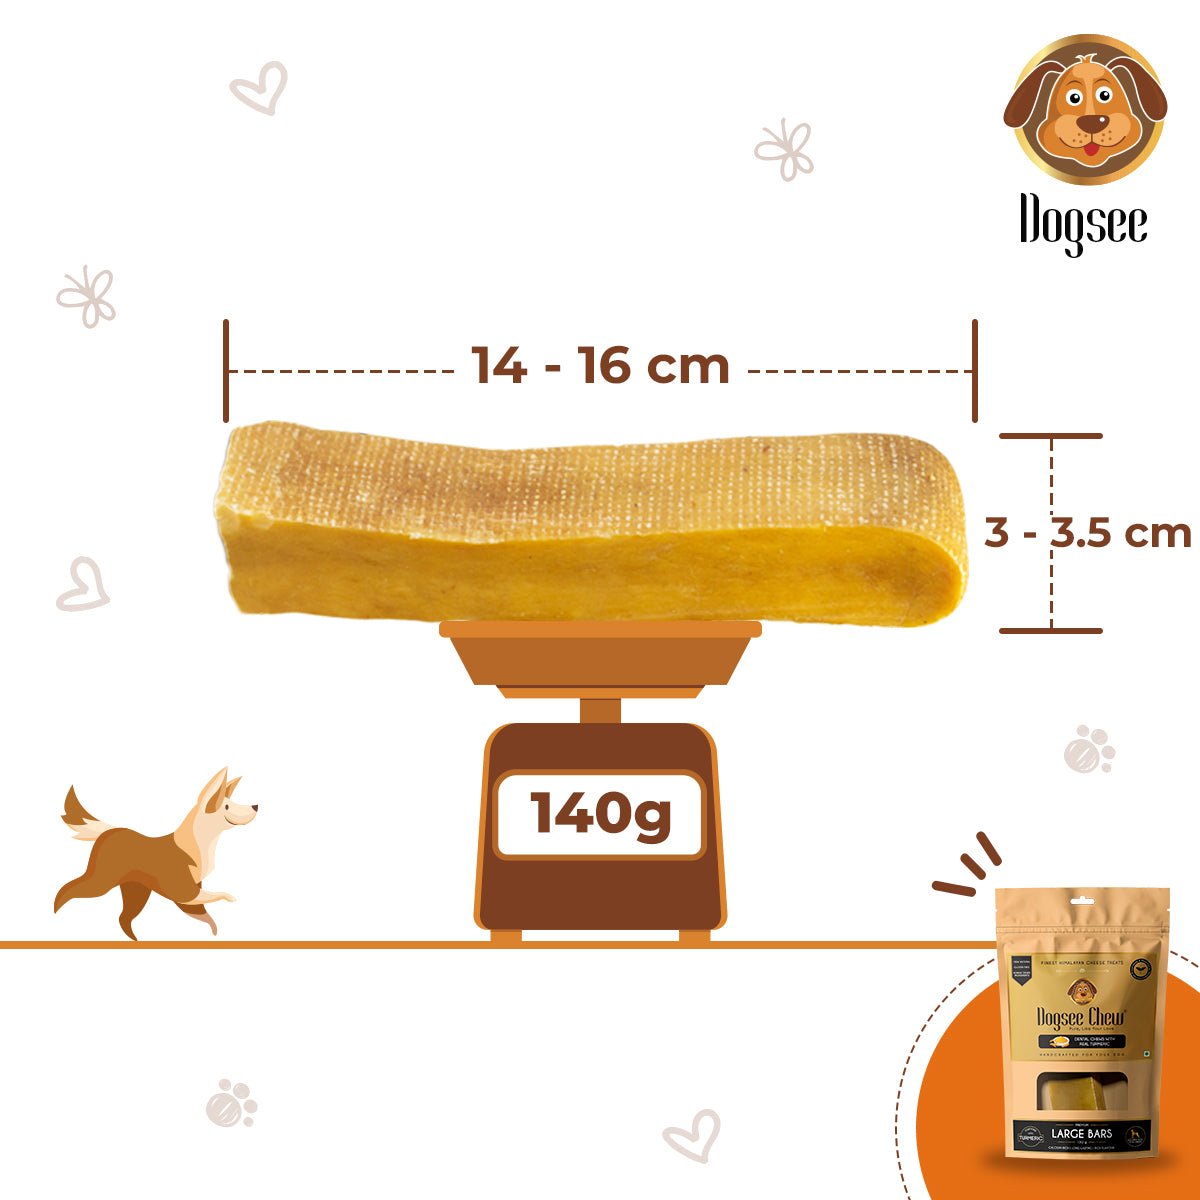 Dogsee Chew Turmeric Large Bars- 130g - Wagr - The Smart Petcare Platform